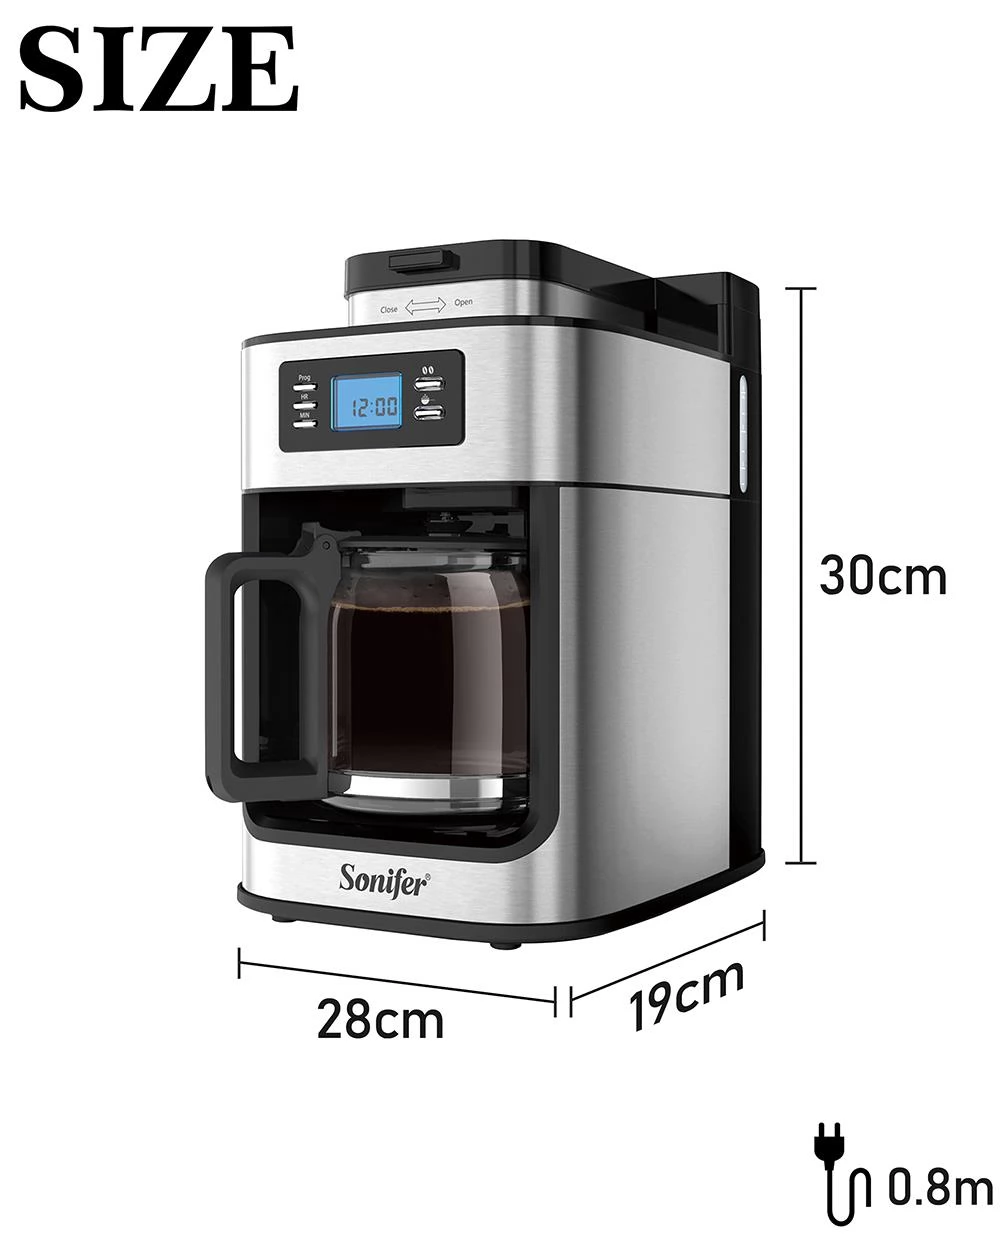 Sonifer SF3541 1050W 2-in-1 Druppelkoffiezetapparaat, 1200mL/10 kopjes, gemalen/bonen koffiezetter, digitaal display, warmhouden